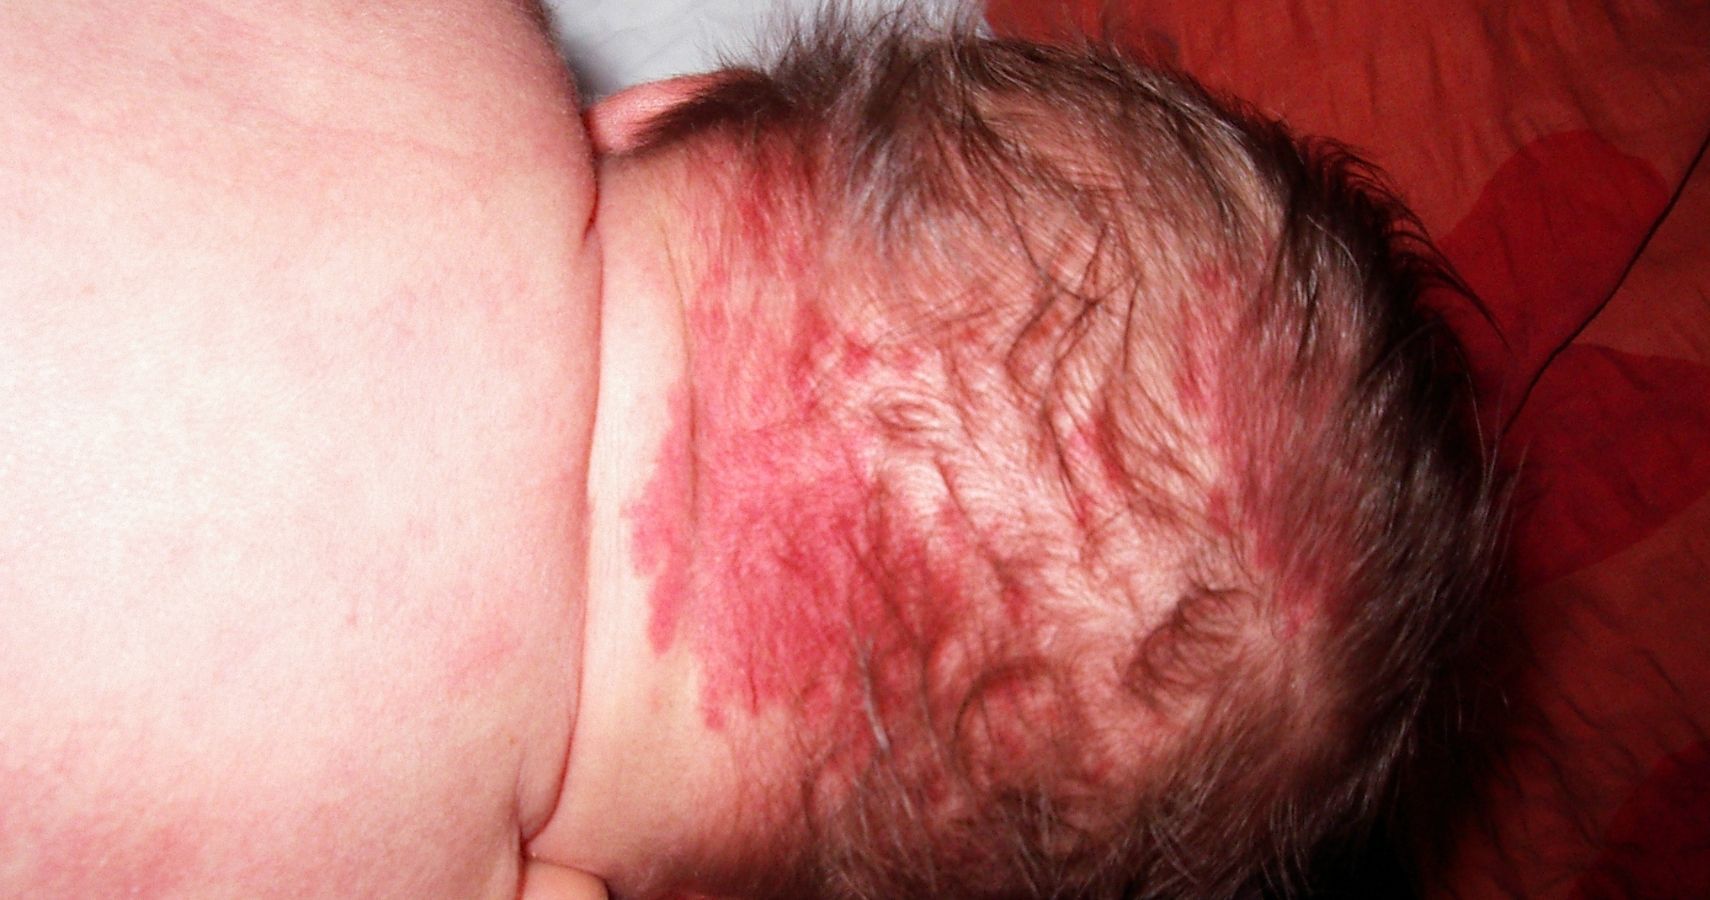 birthmarks in babies